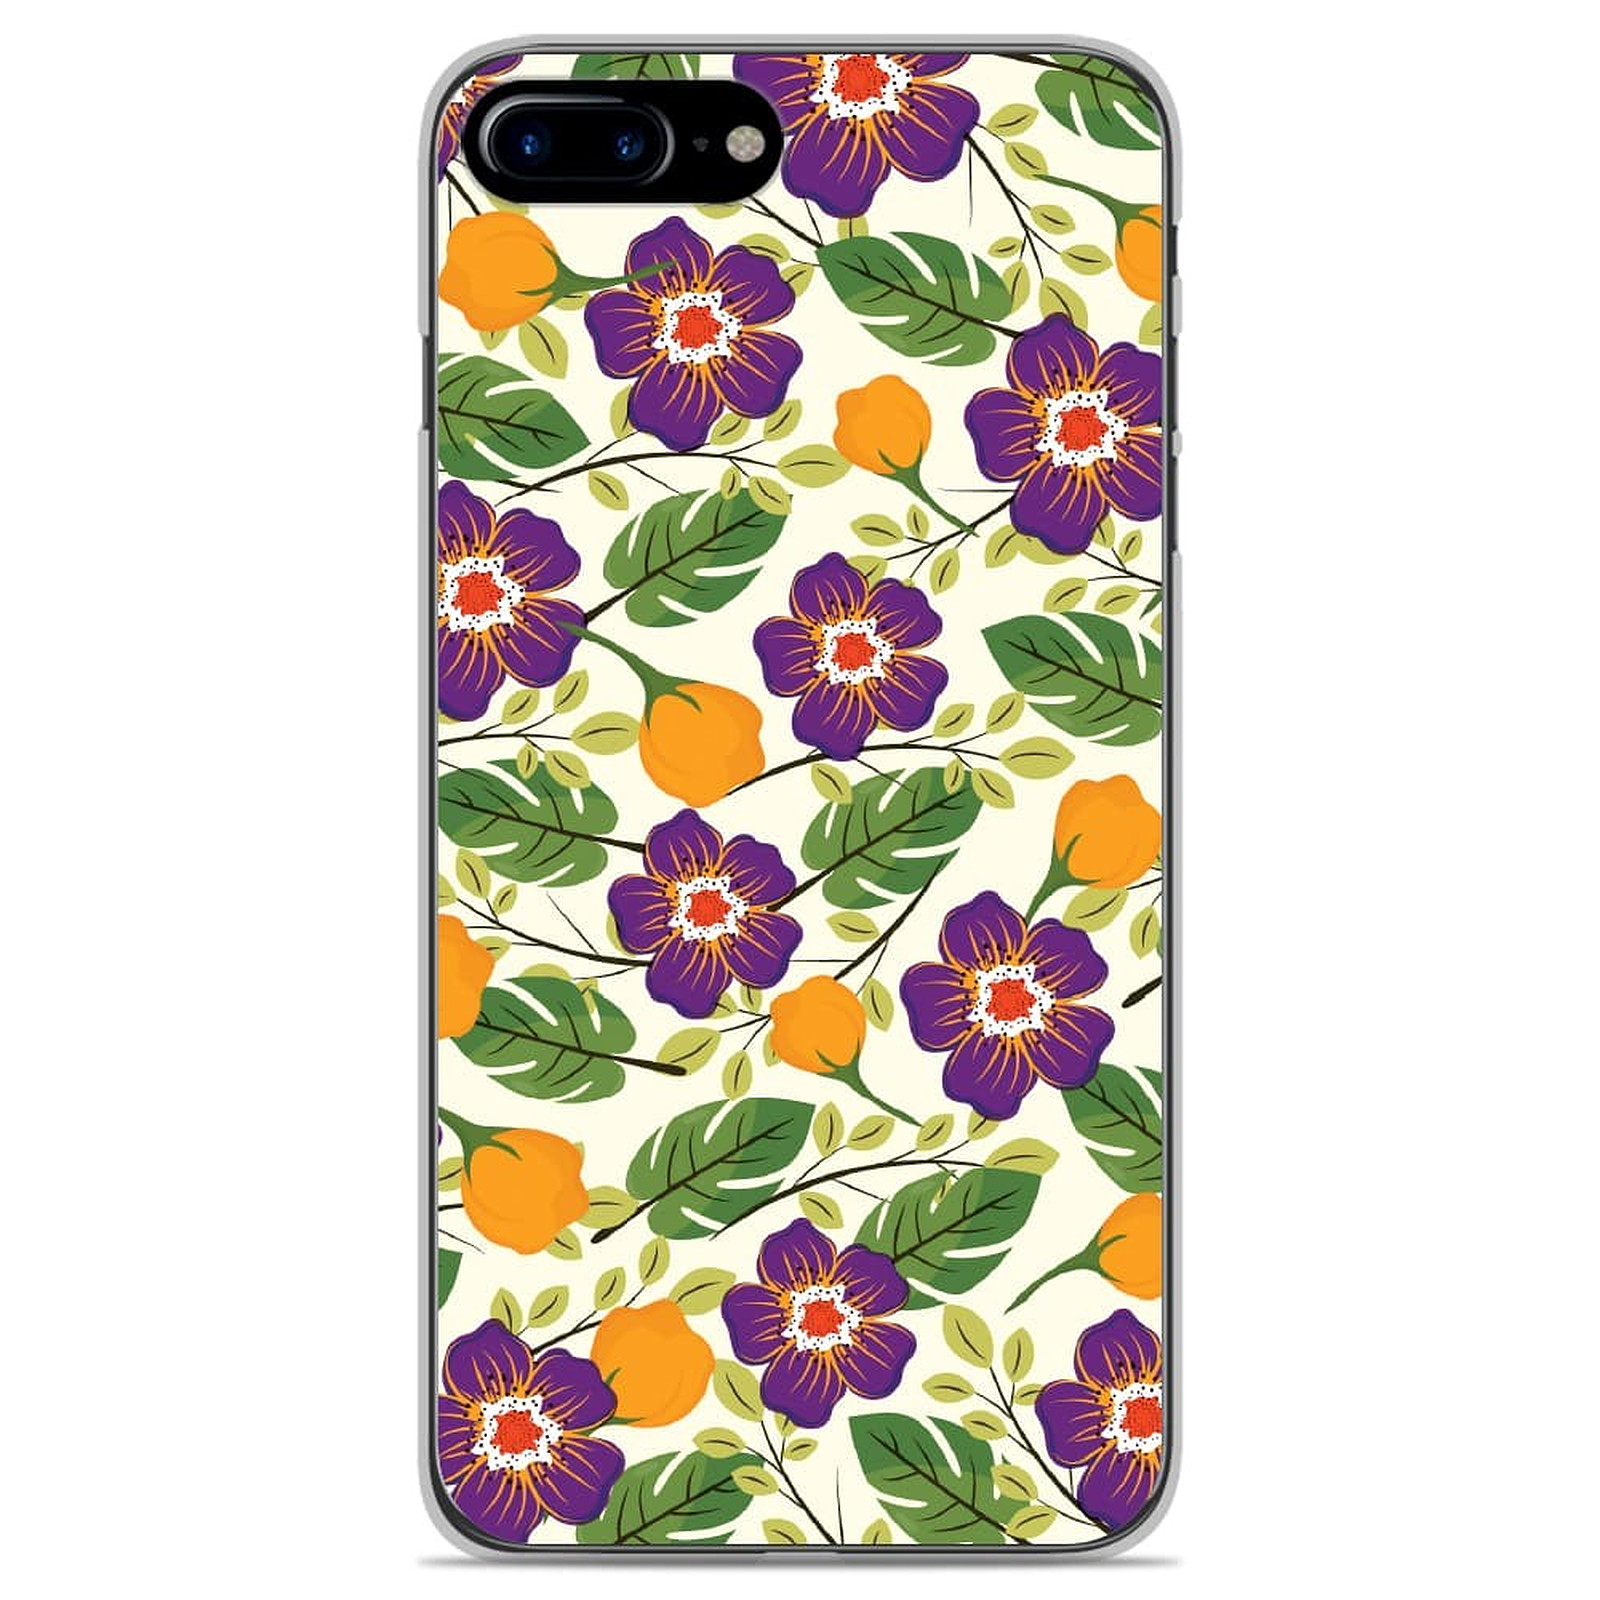 1001 Coques Coque silicone gel Apple iPhone 7 Plus motif Fleurs Violettes - Coque telephone 1001Coques